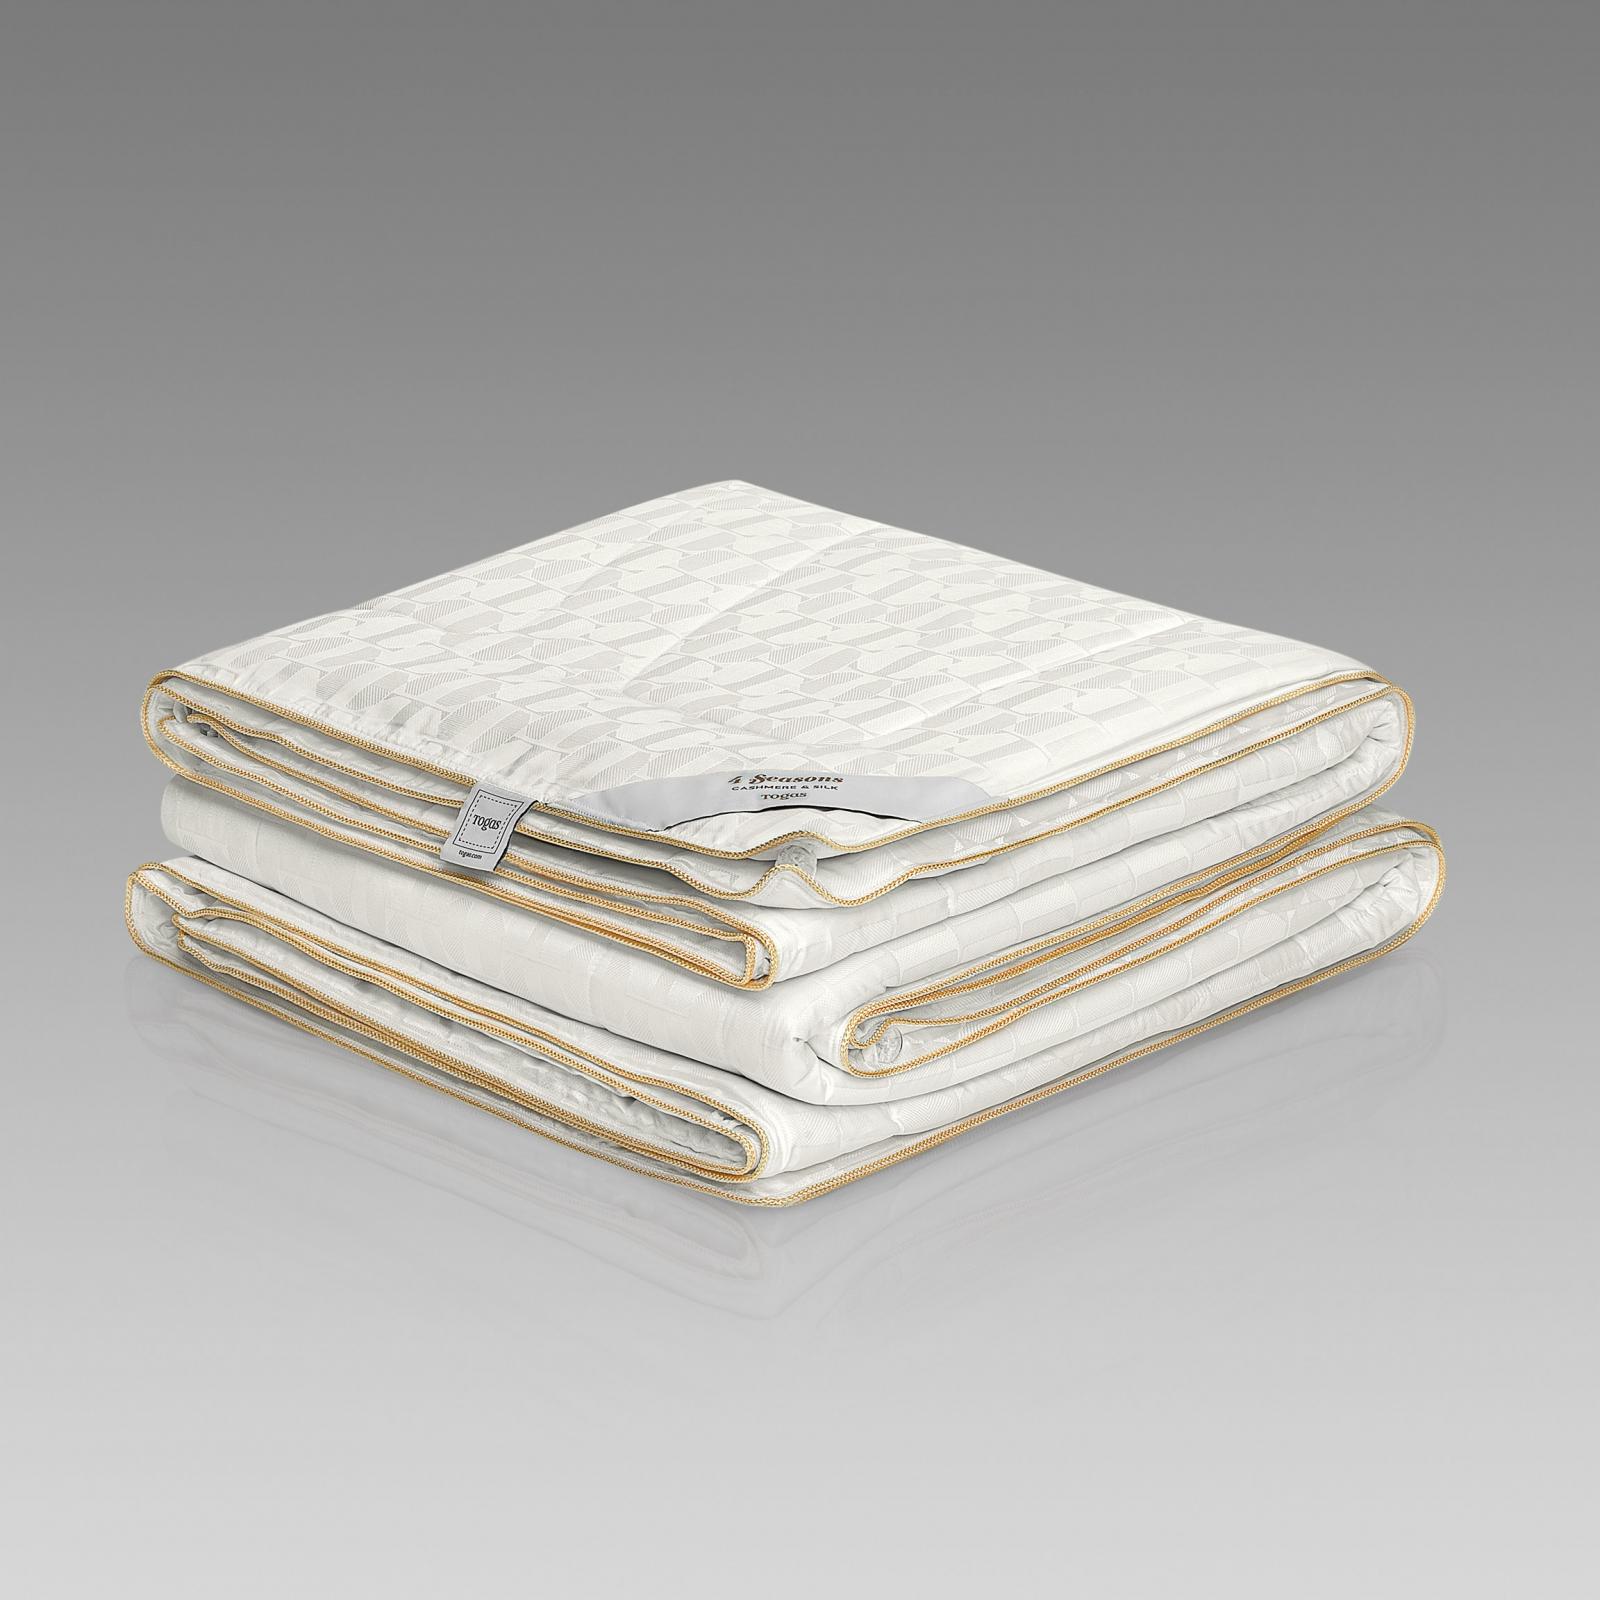 Одеяло Togas 4 сезона белое 140х200 см (20.04.40.0000) одеяло medsleep nubi белое 140х200 см